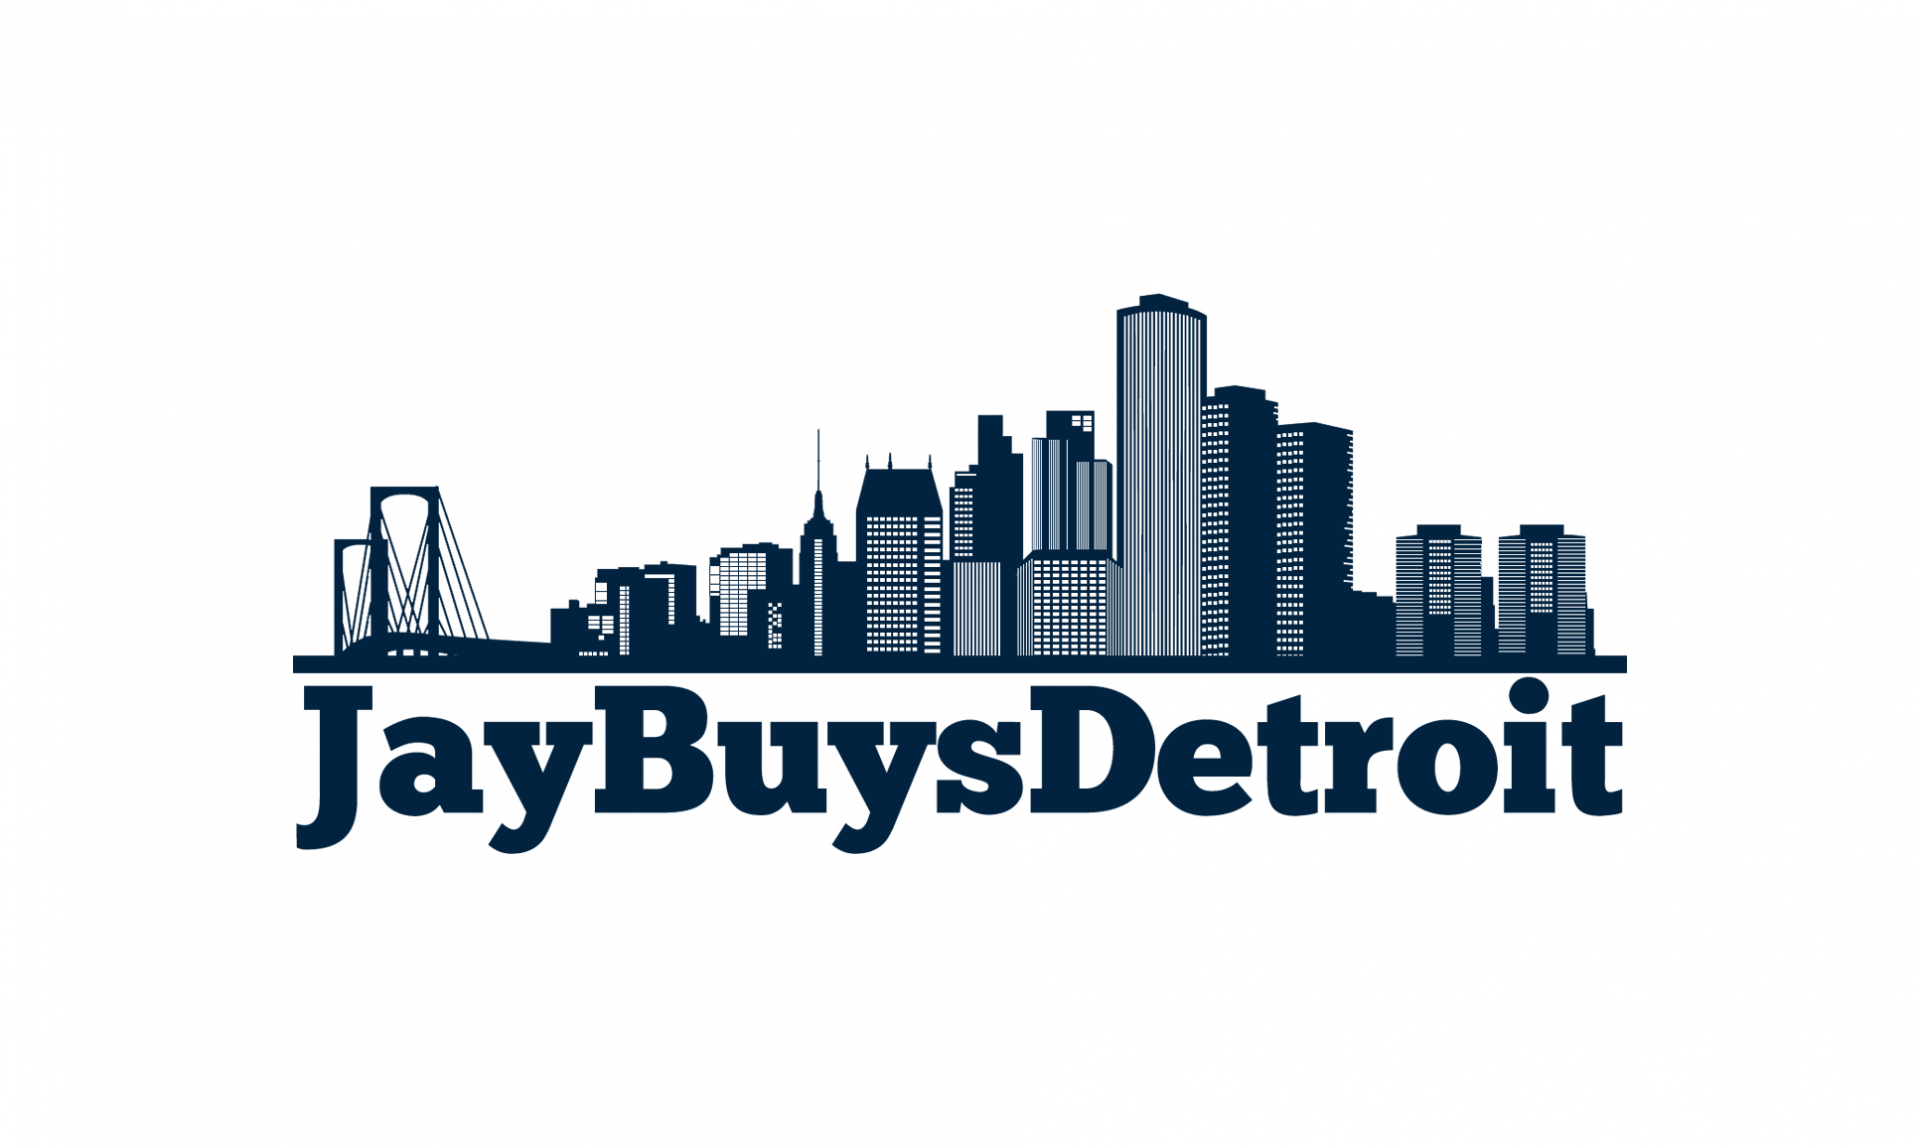 Jay Buys Detroit  logo